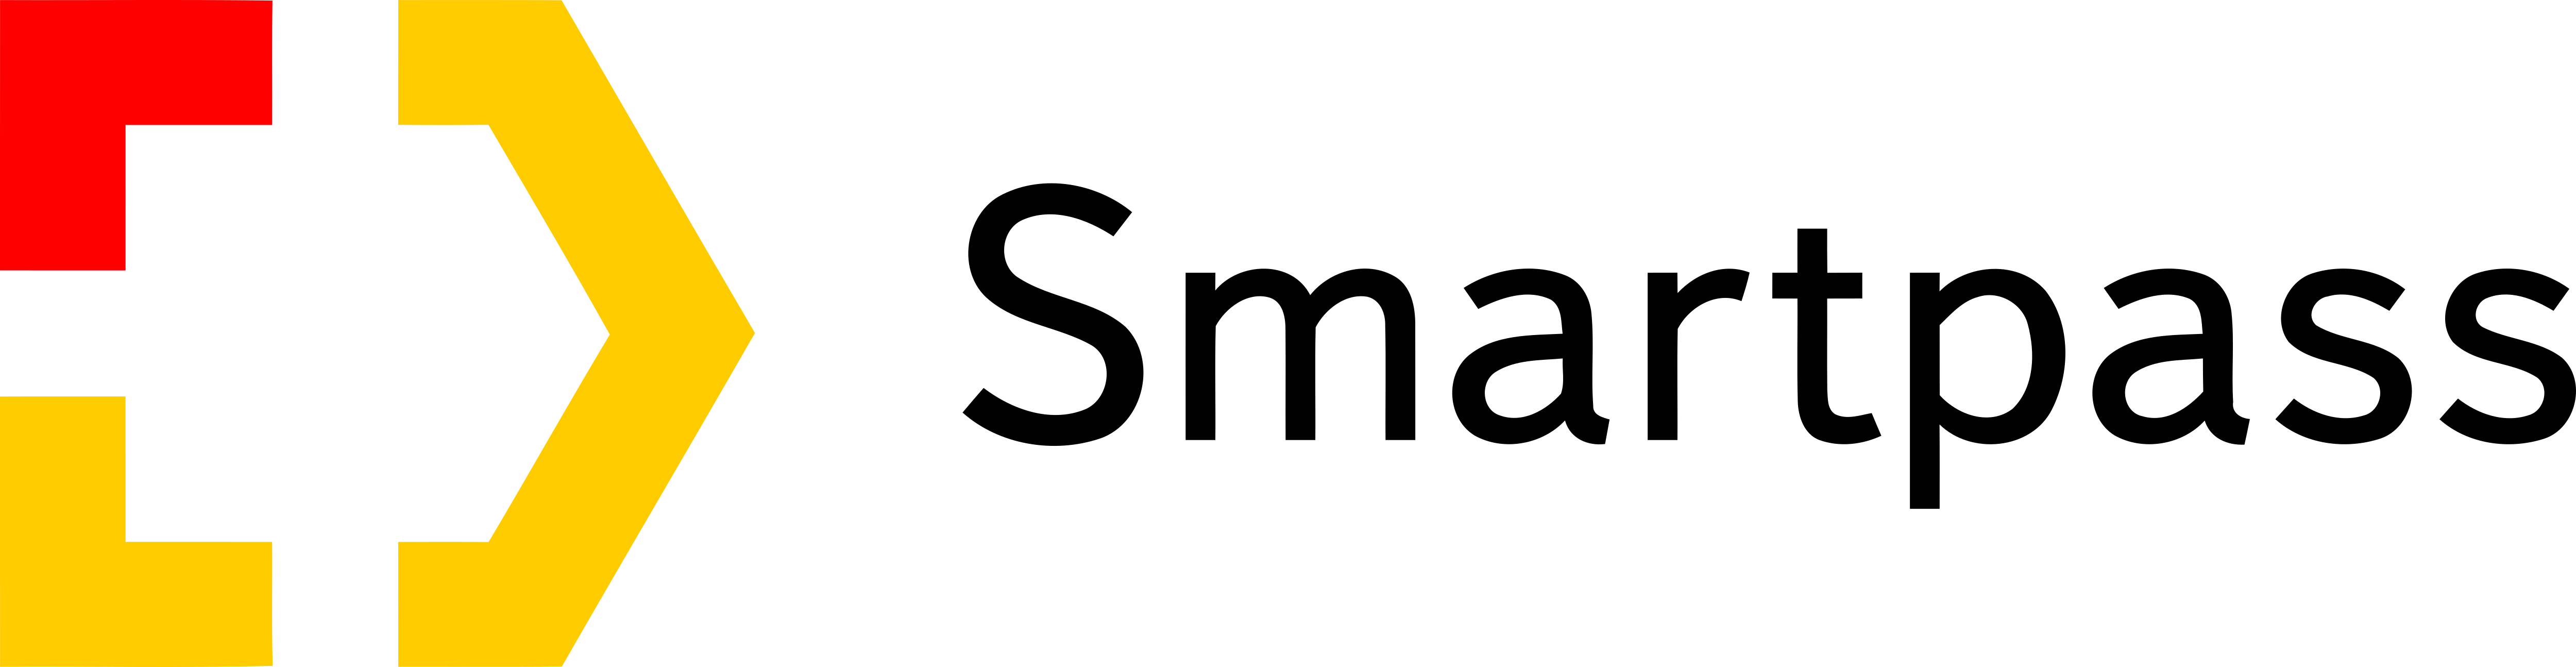 YANDEX logo imagen transparente